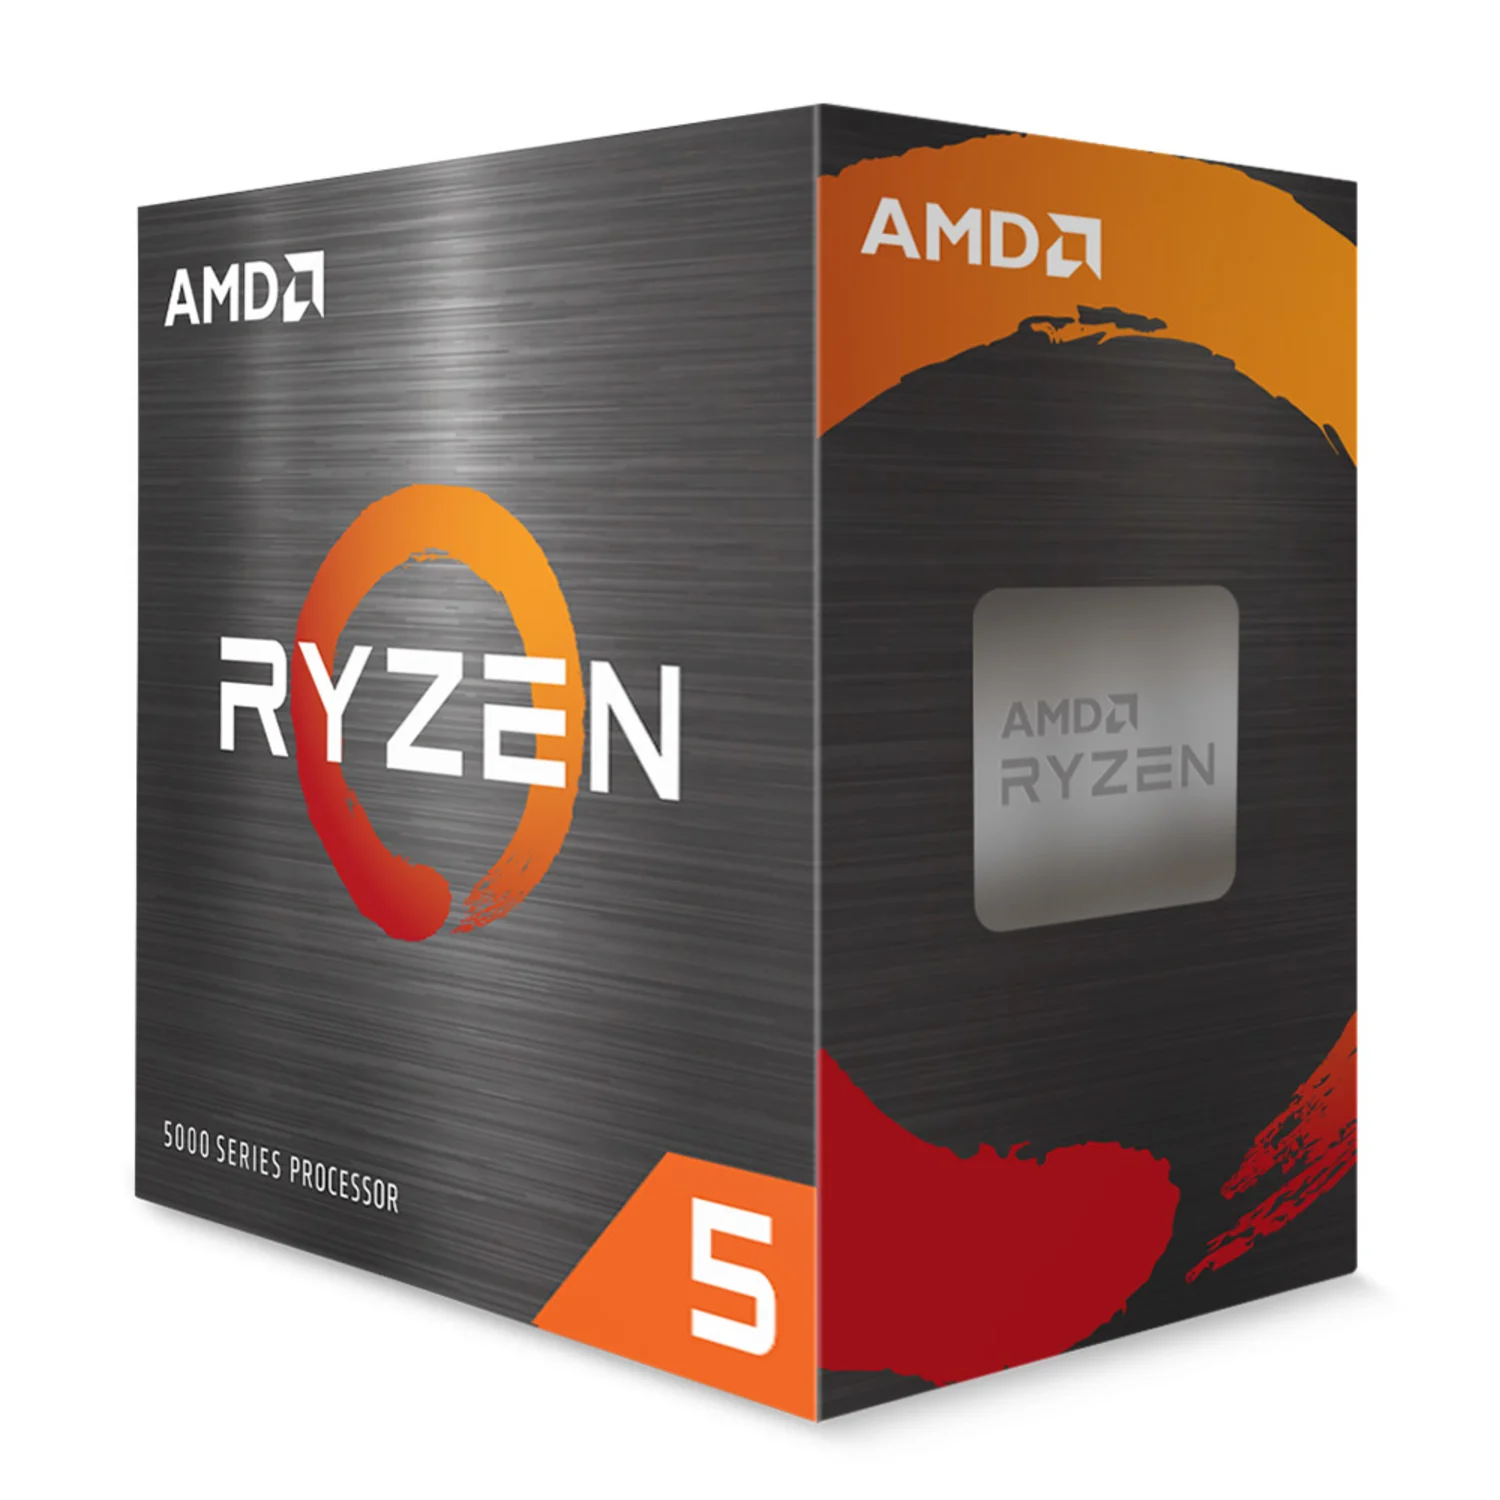 Processador AMD Ryzen 5 5600X Socket AM4 6 Core 12 Threads 3.7GHz e 4.6GHz Turbo Cache 3 MB

